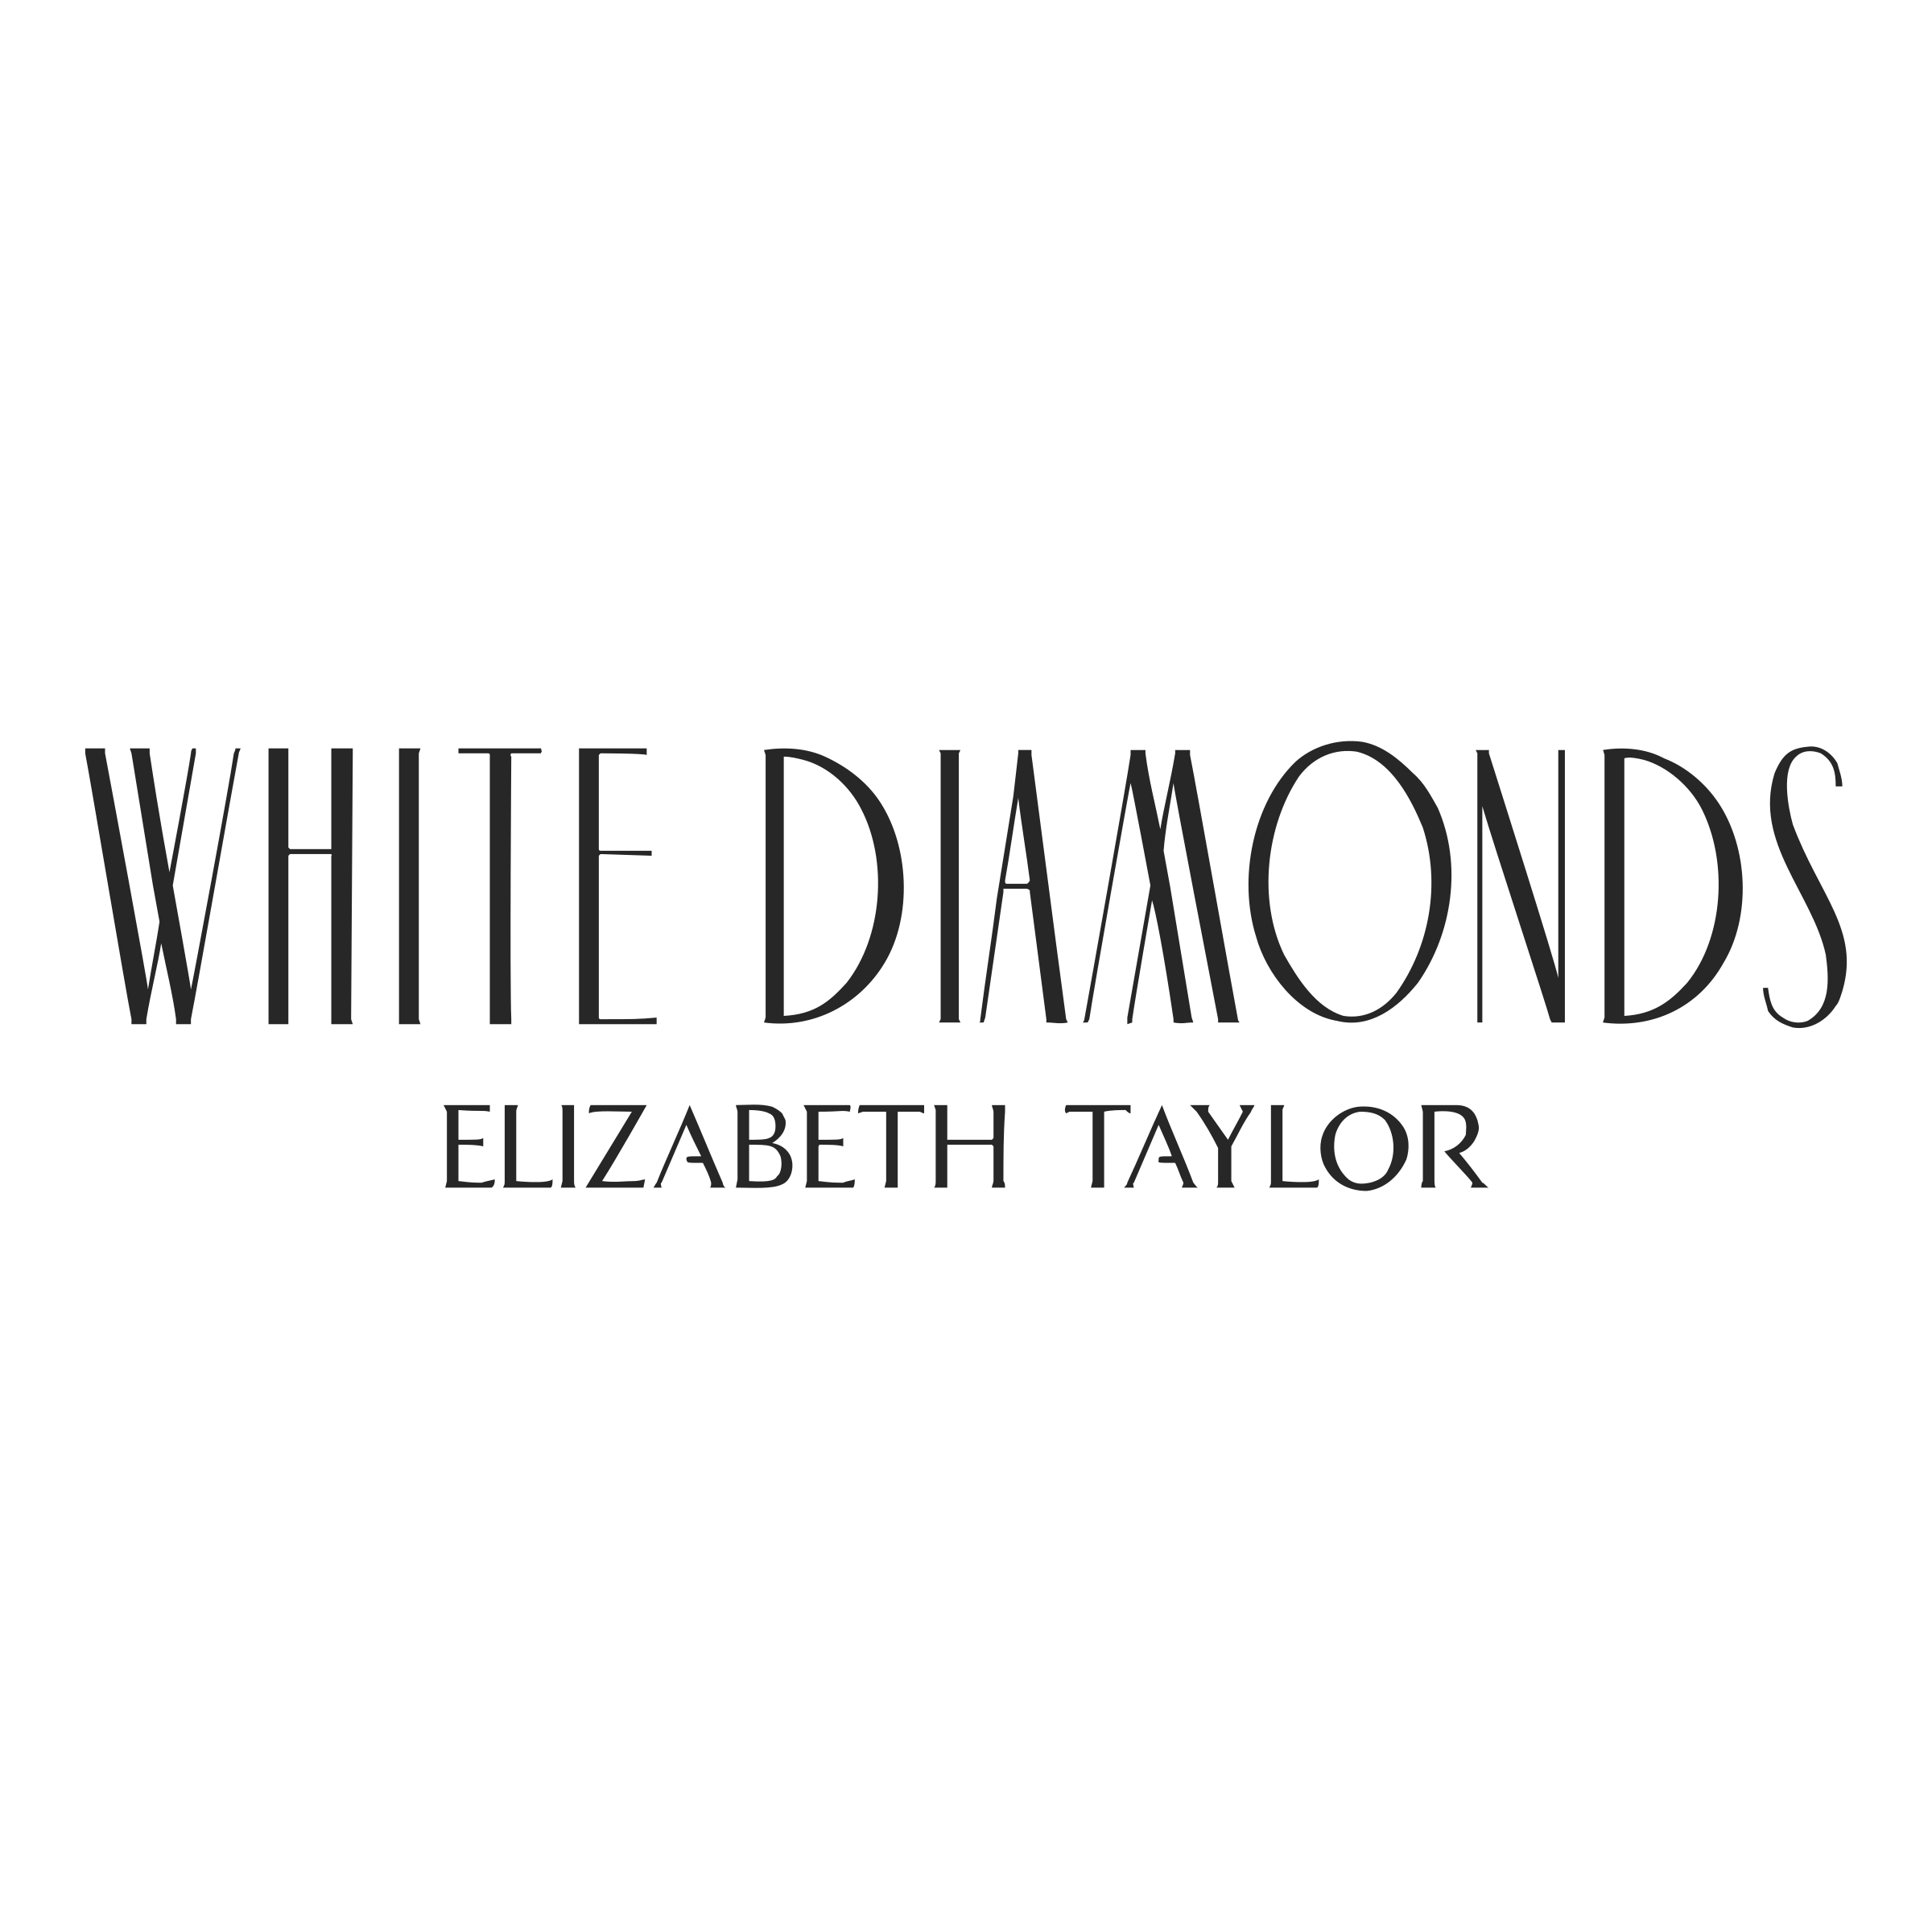 White Diamond Logo - White Diamonds Logo PNG Transparent & SVG Vector - Freebie Supply